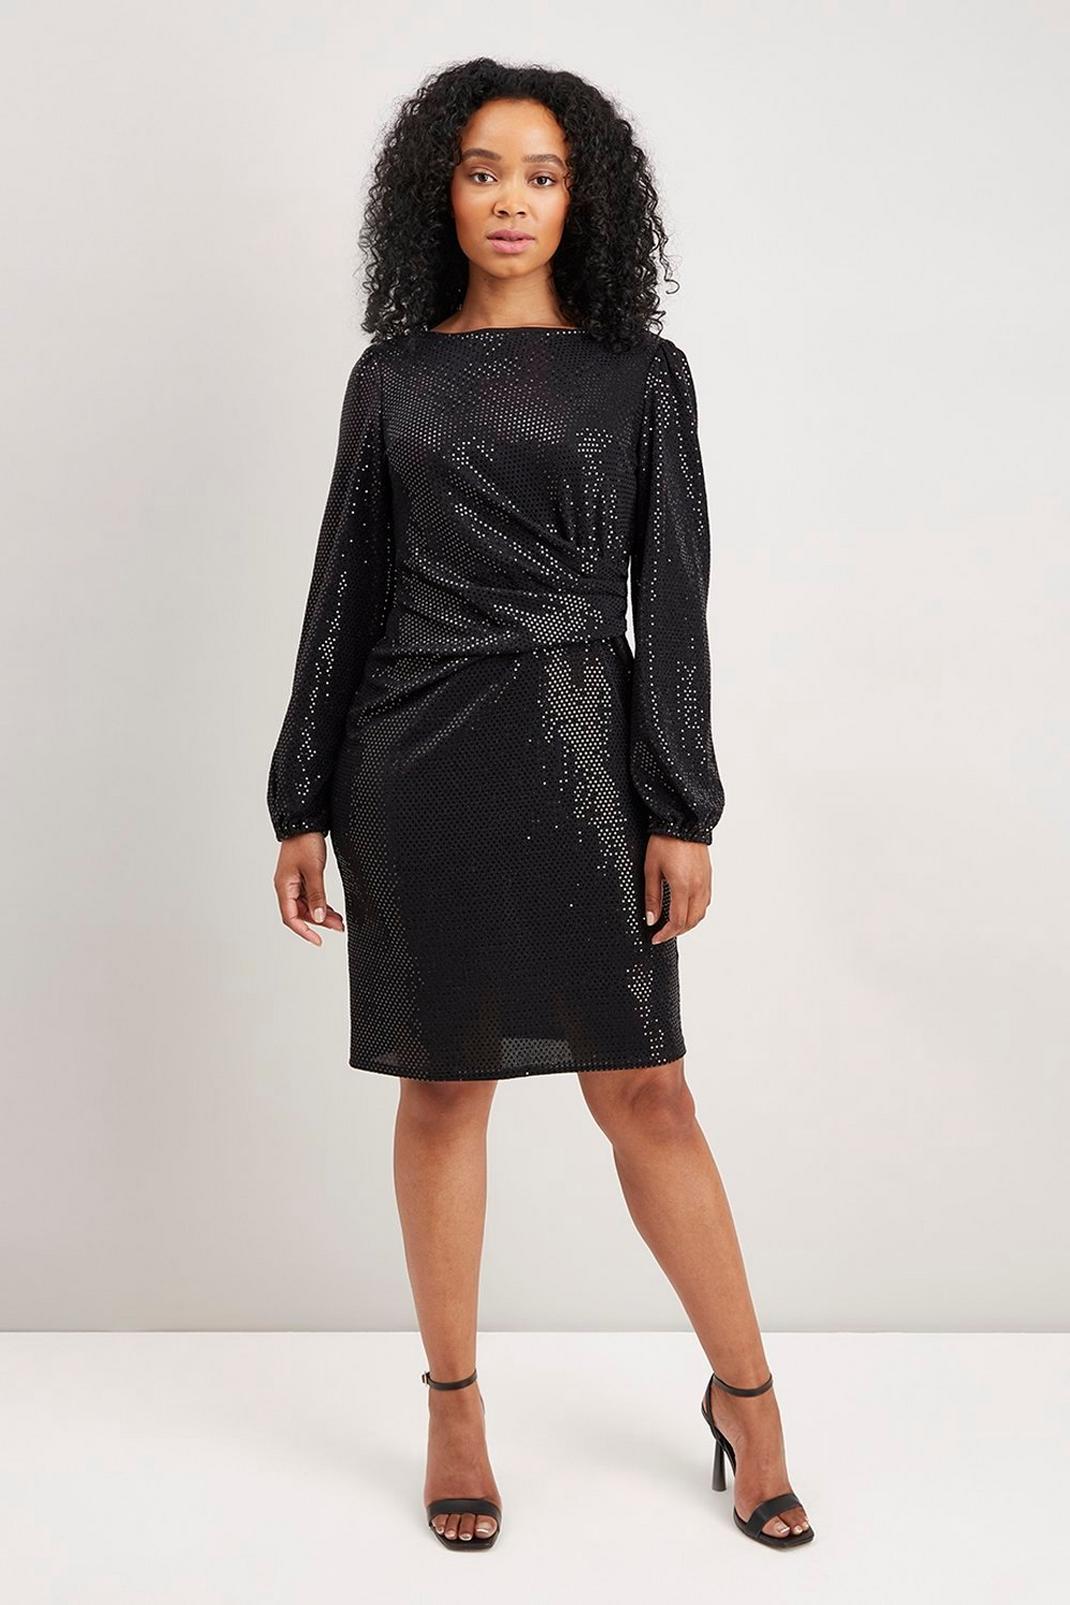 Petite Black Sequin Ruch Side Dress image number 1